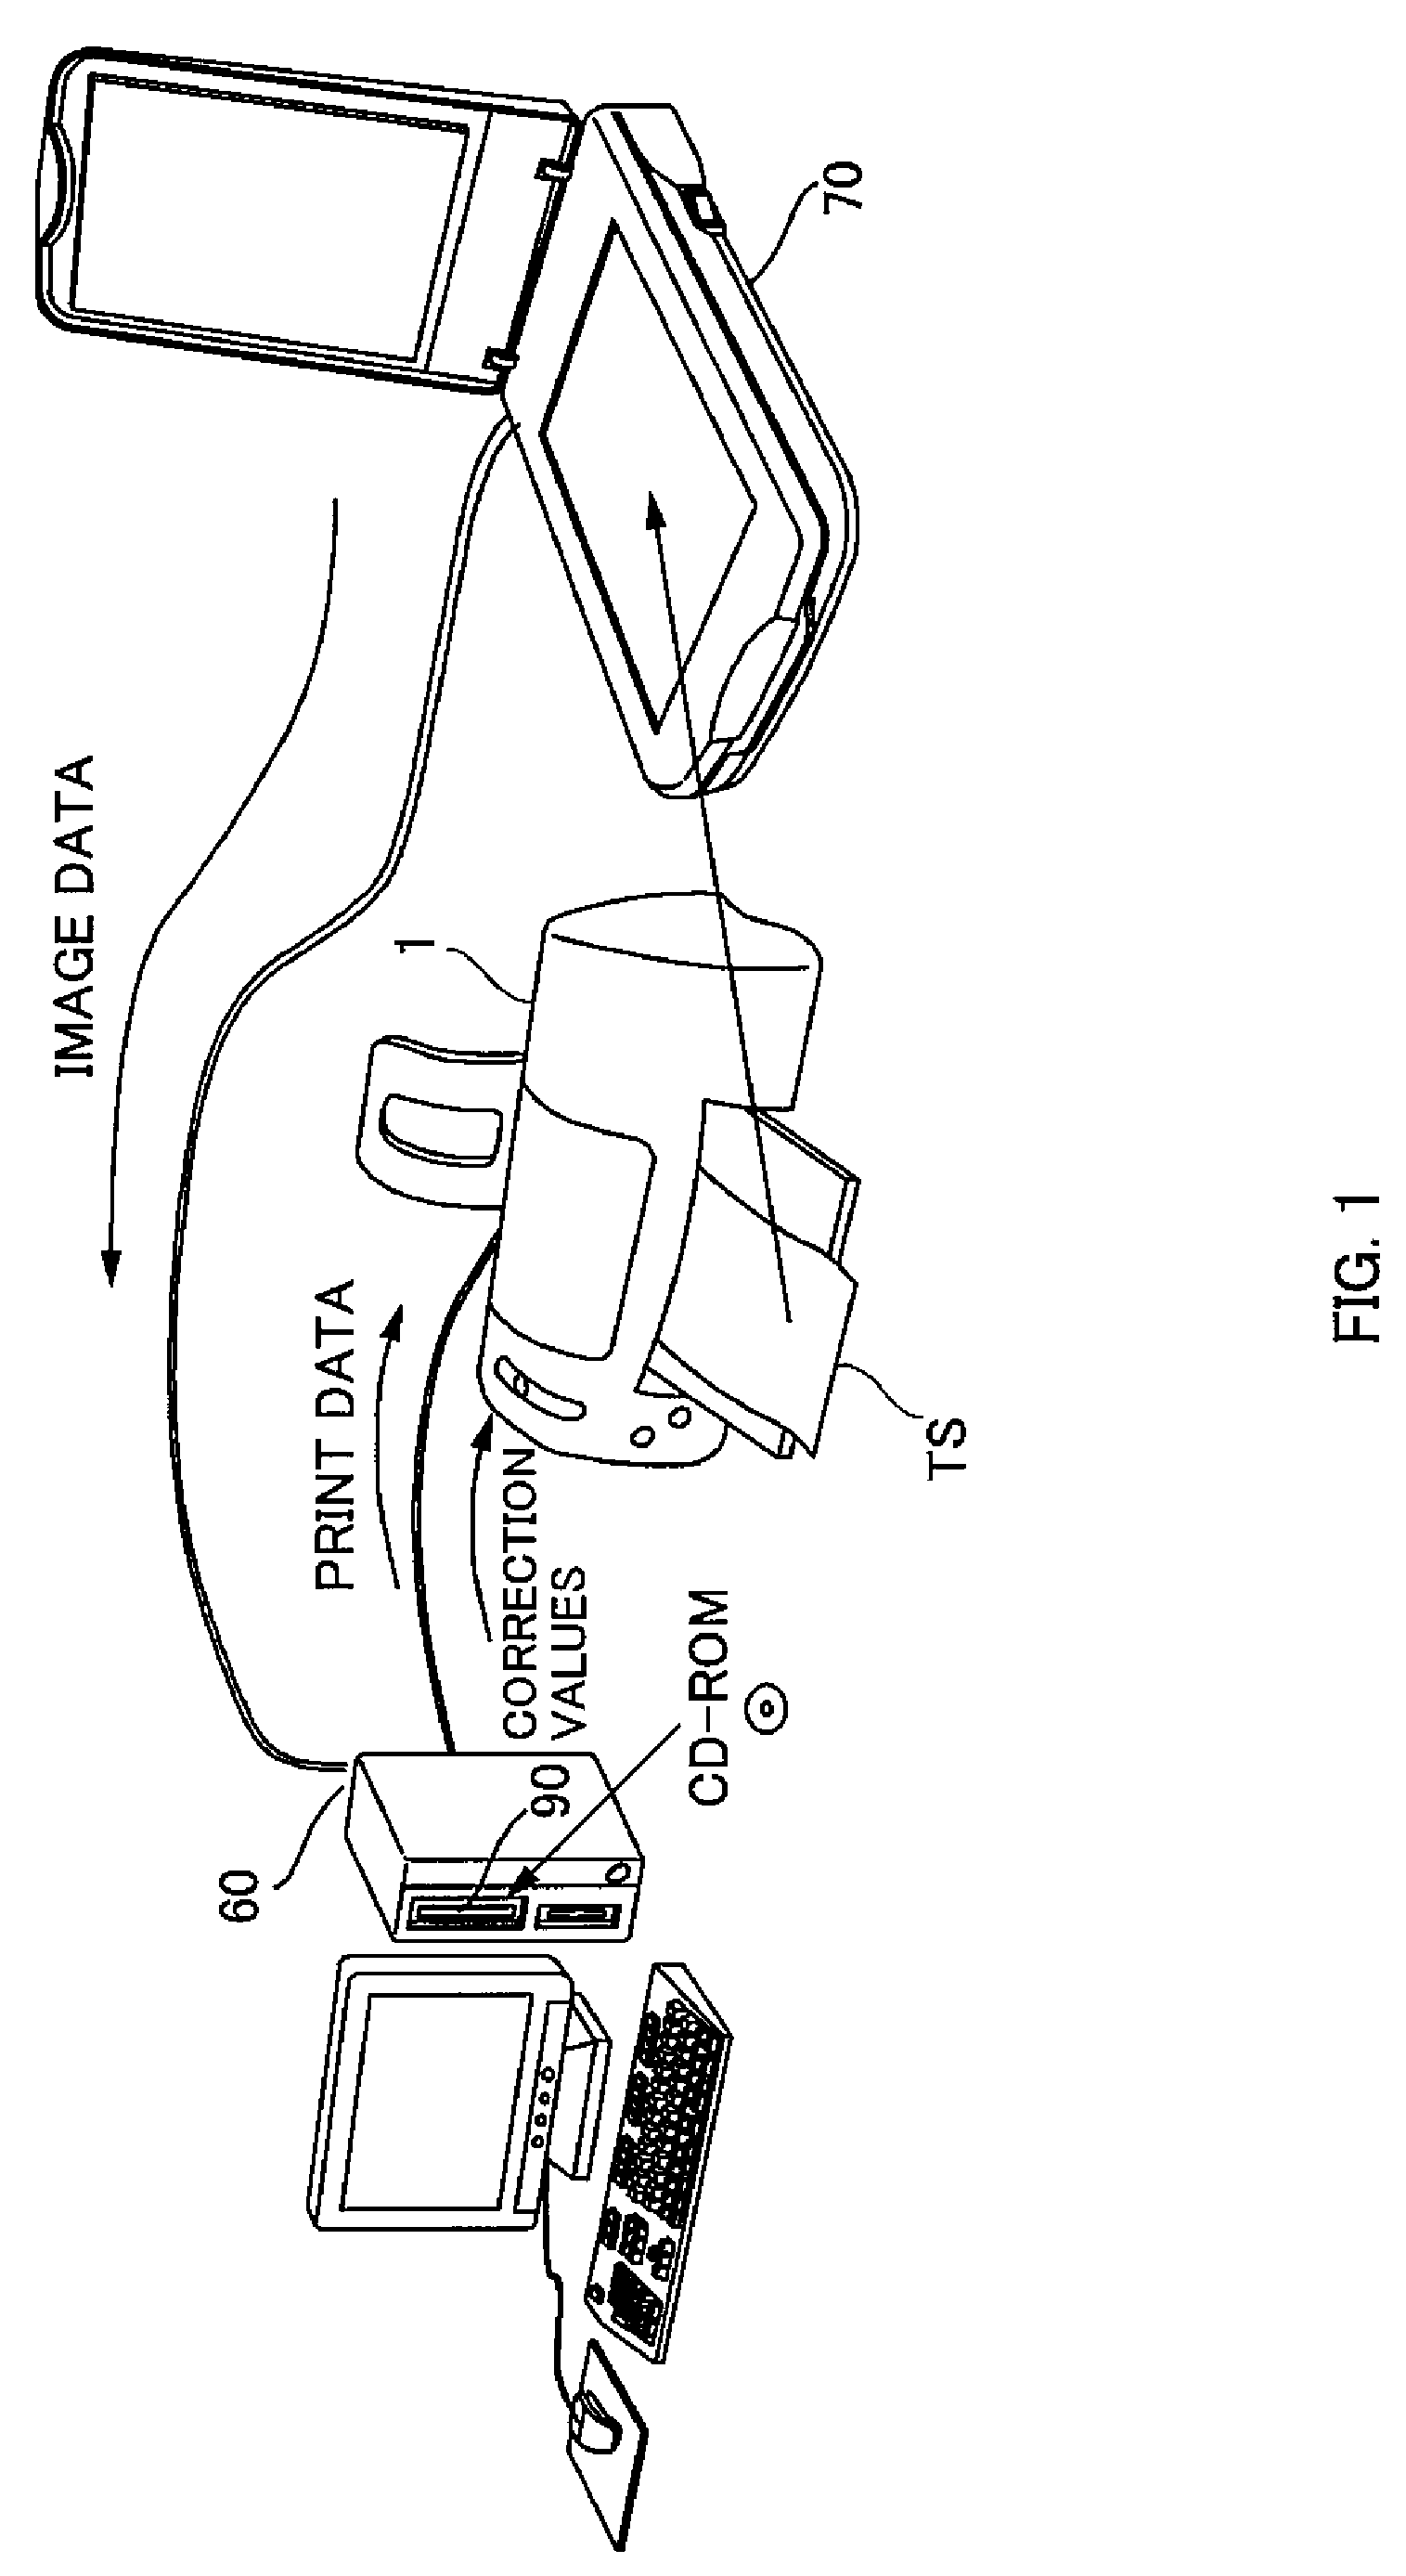 Liquid ejecting method and liquid ejecting apparatus